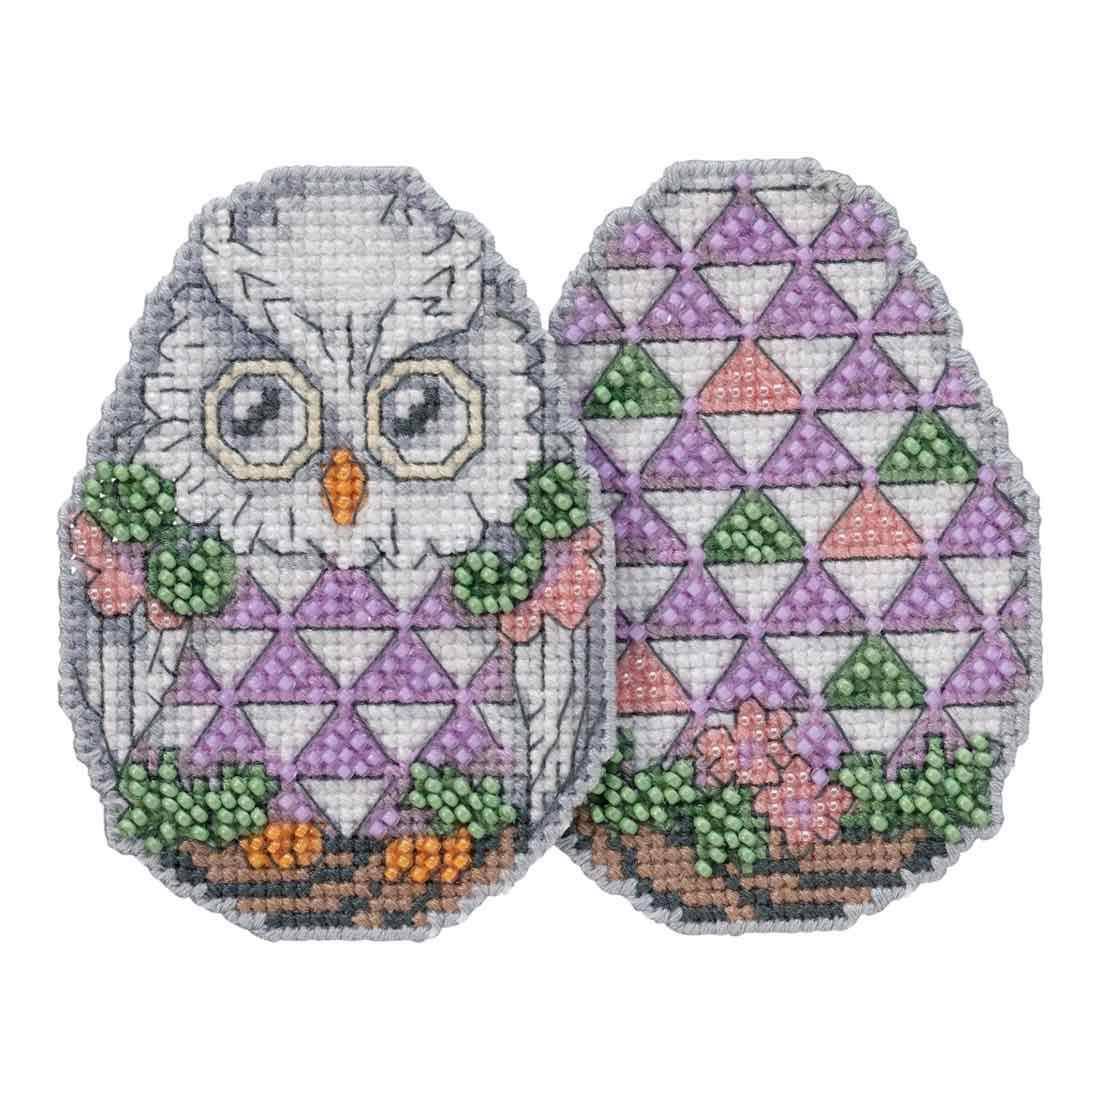 Mill Hill Owl Egg Ornament Cross Stitch Kit - 2.75in x 3.75 in